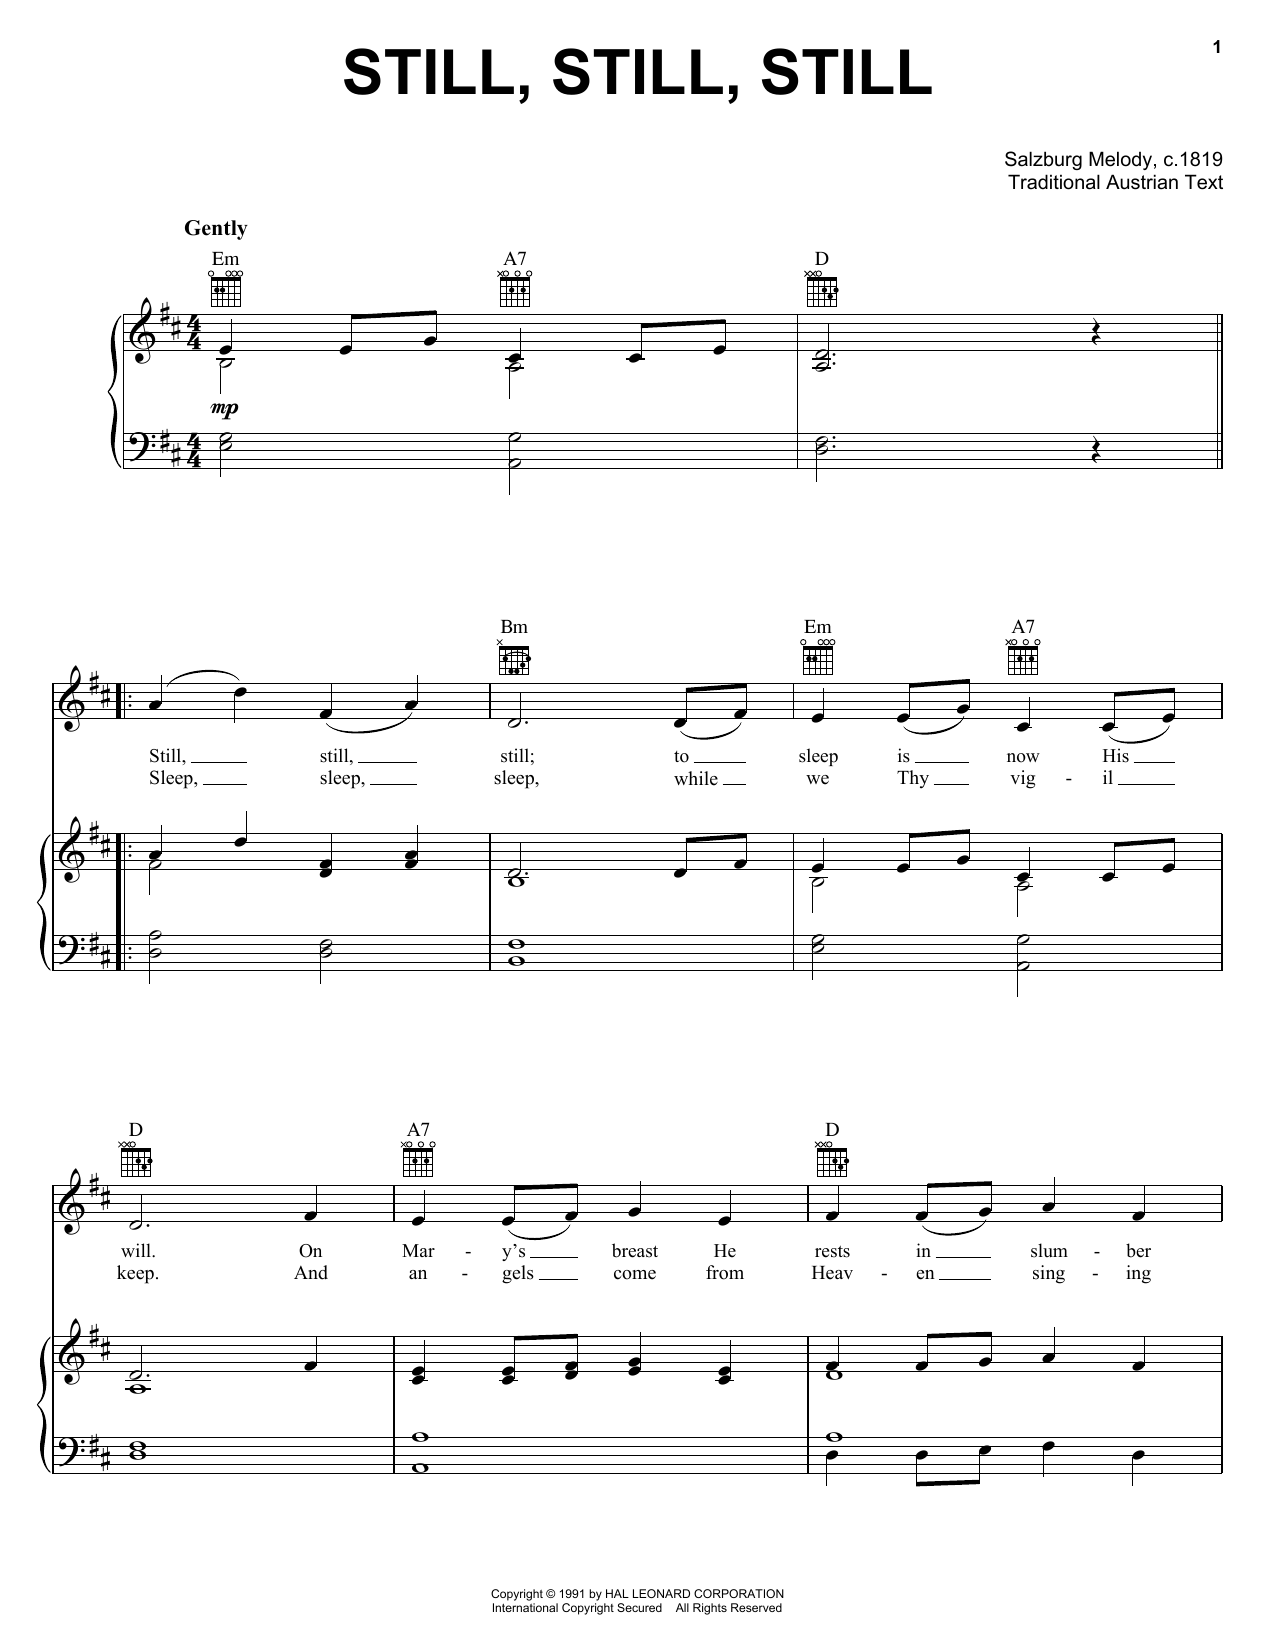 Traditional Still, Still, Still sheet music notes and chords arranged for Violin and Piano